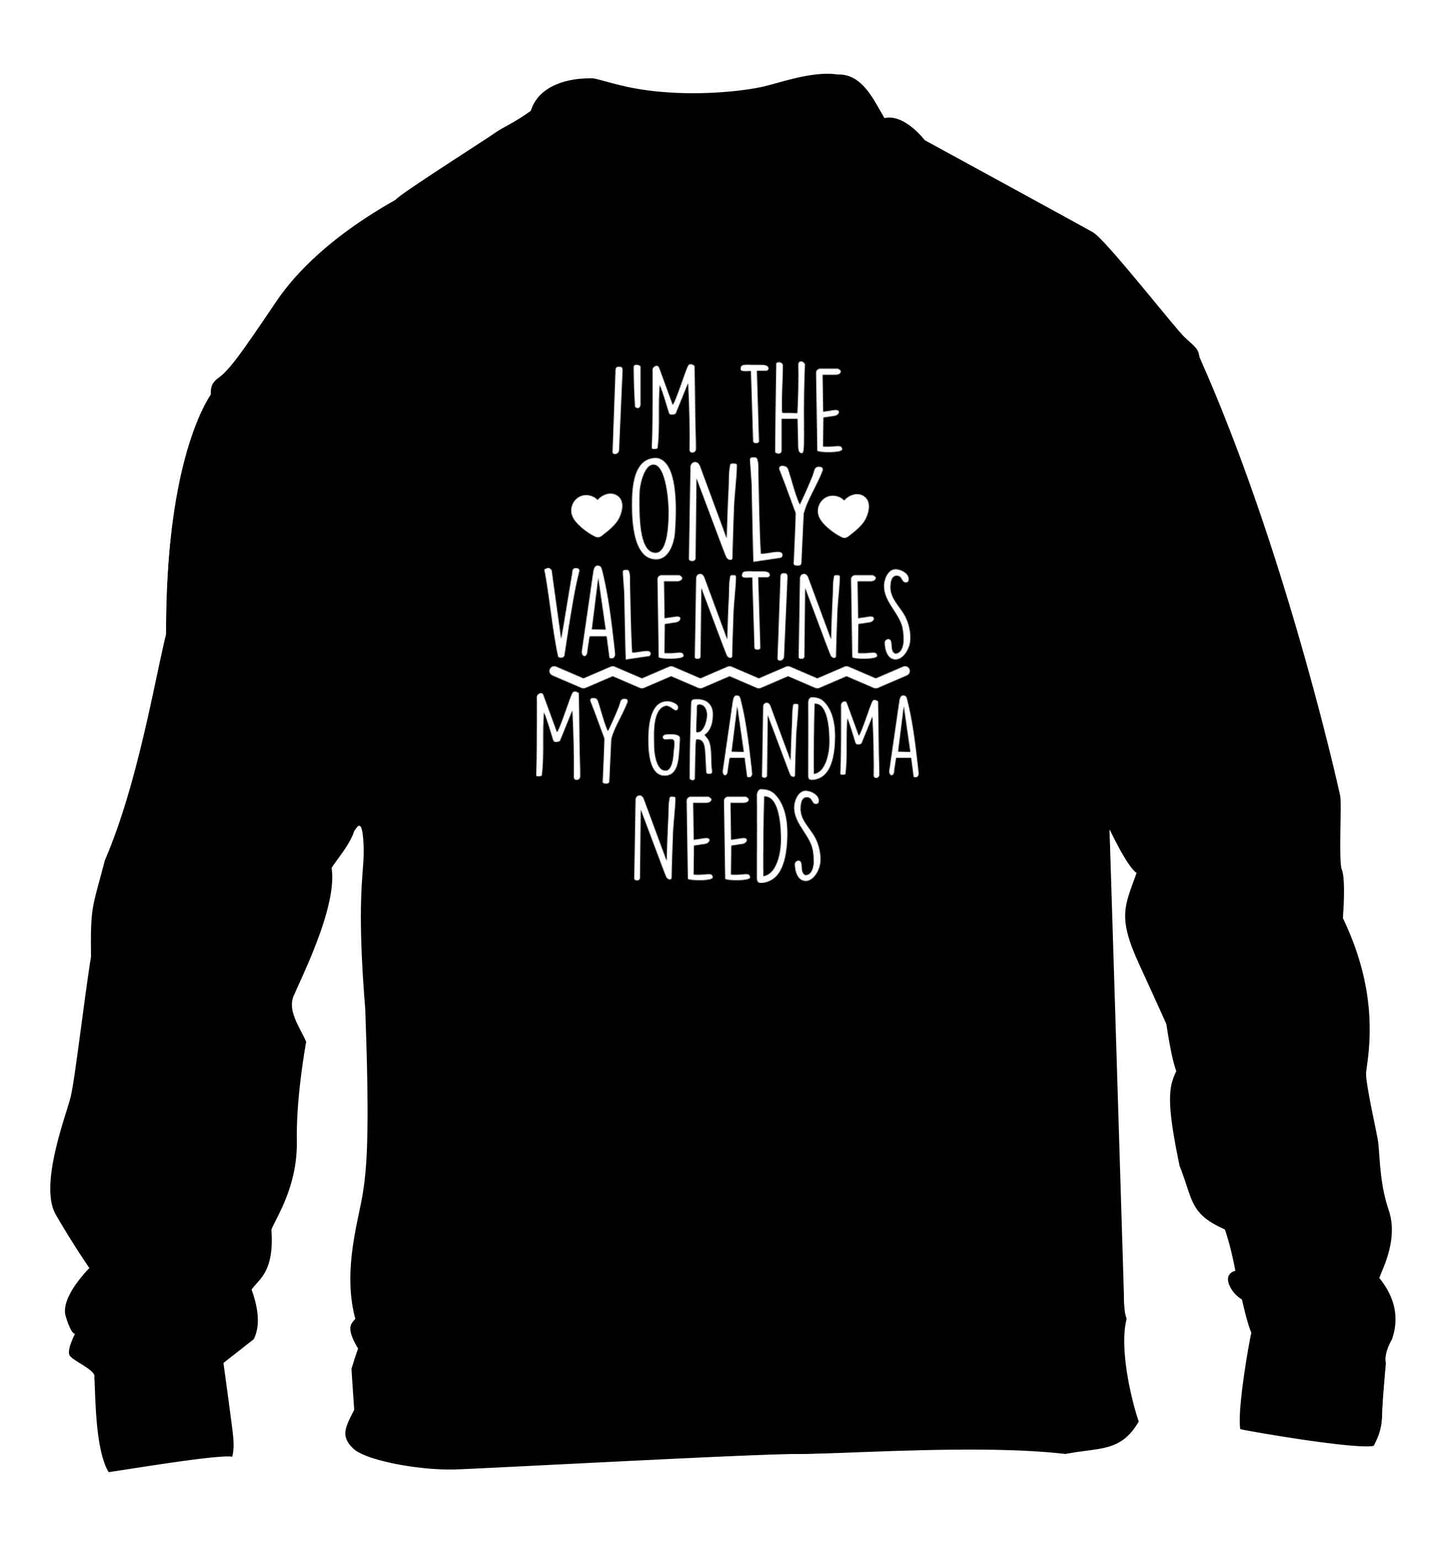 I'm the only valentines my grandma needs children's black sweater 12-13 Years